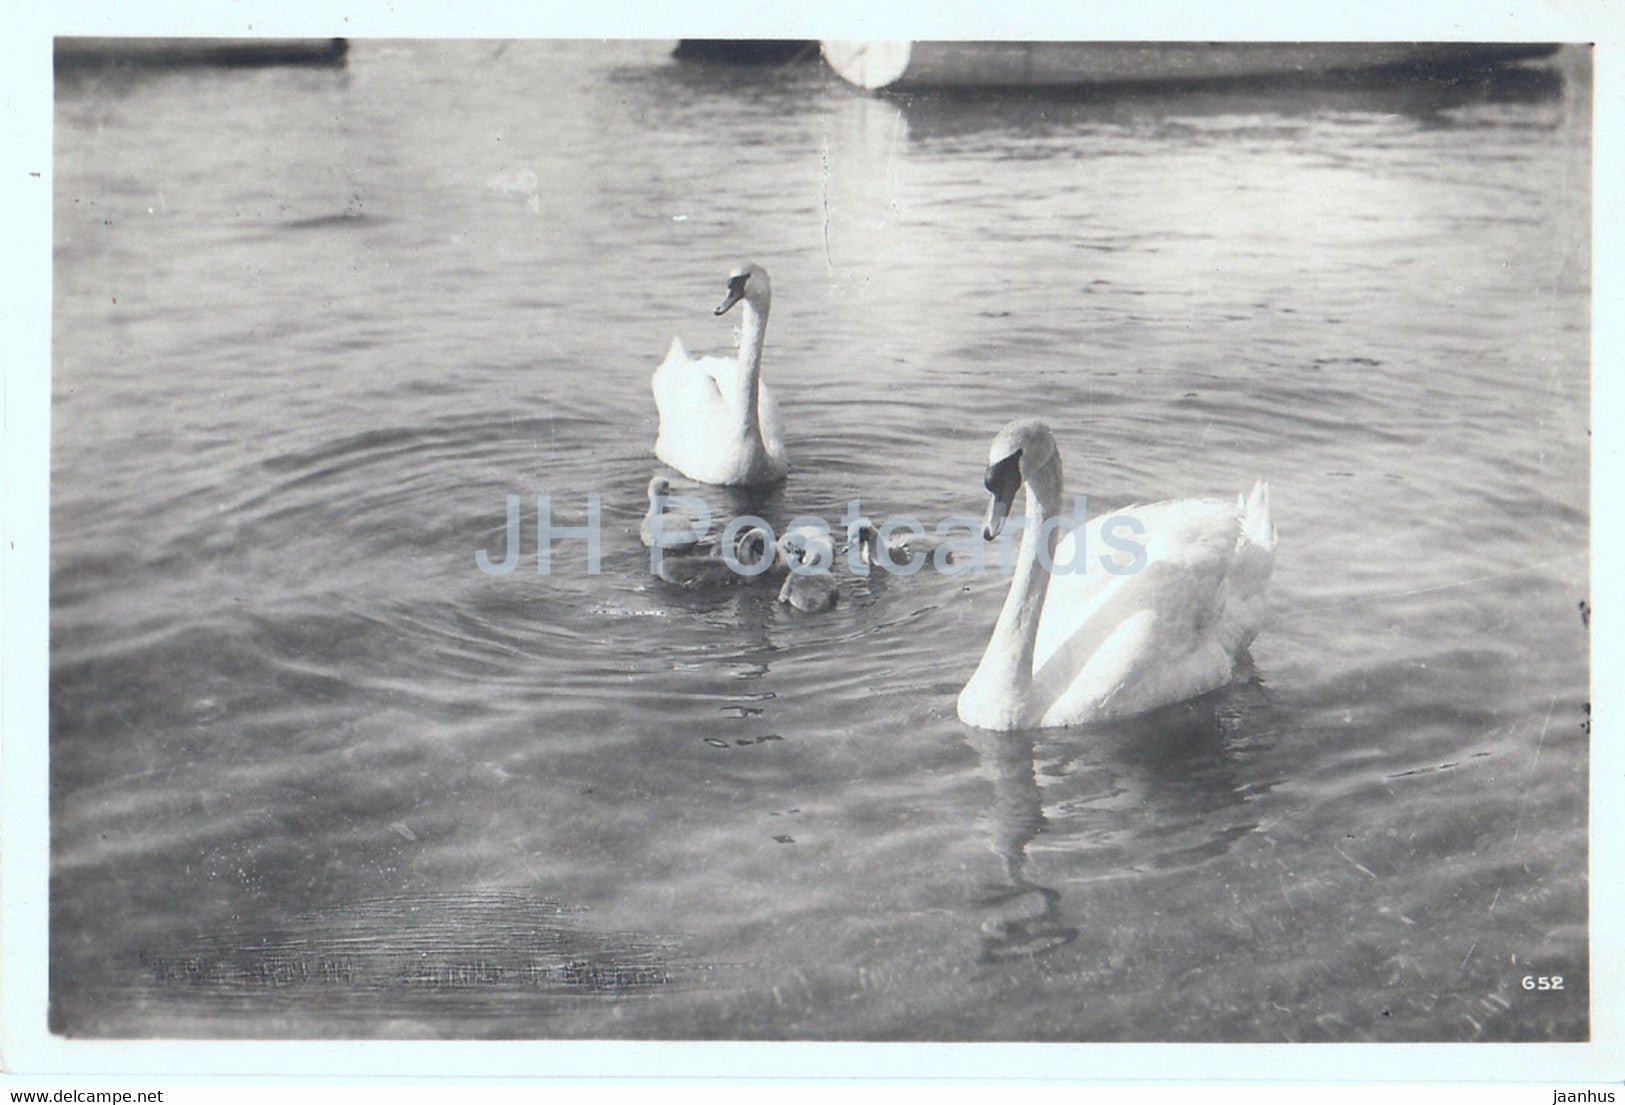 swan - birds - Perrochet 652 - old postcard - Switzerland - 1928 - used - JH Postcards